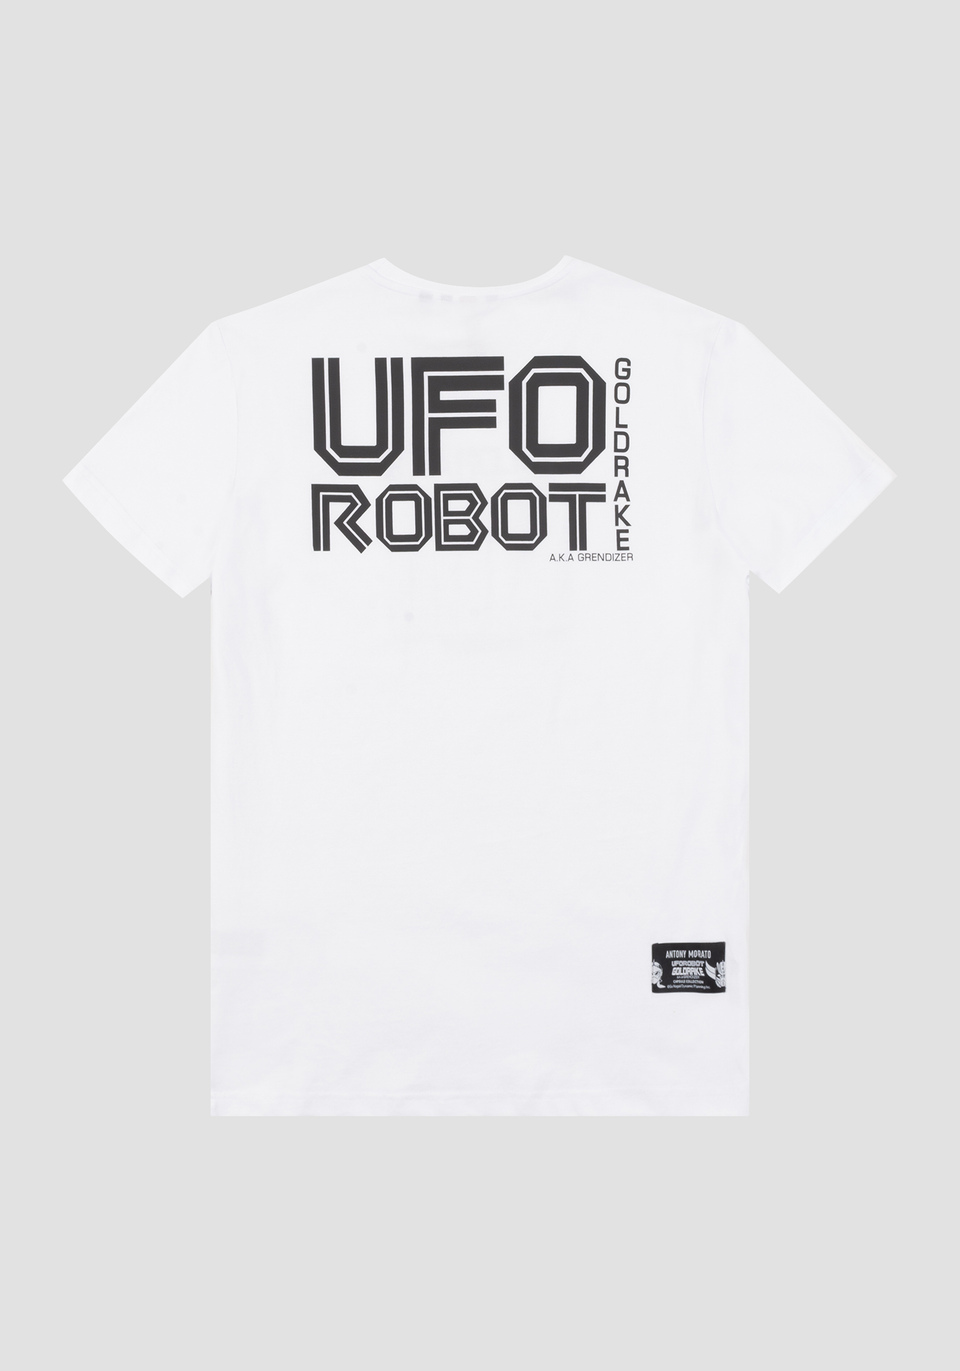 BAUMWOLL-T-SHIRT IN SLIM FIT MIT UFO ROBOT GOLDRAKE-PRINT - Antony Morato Online Shop